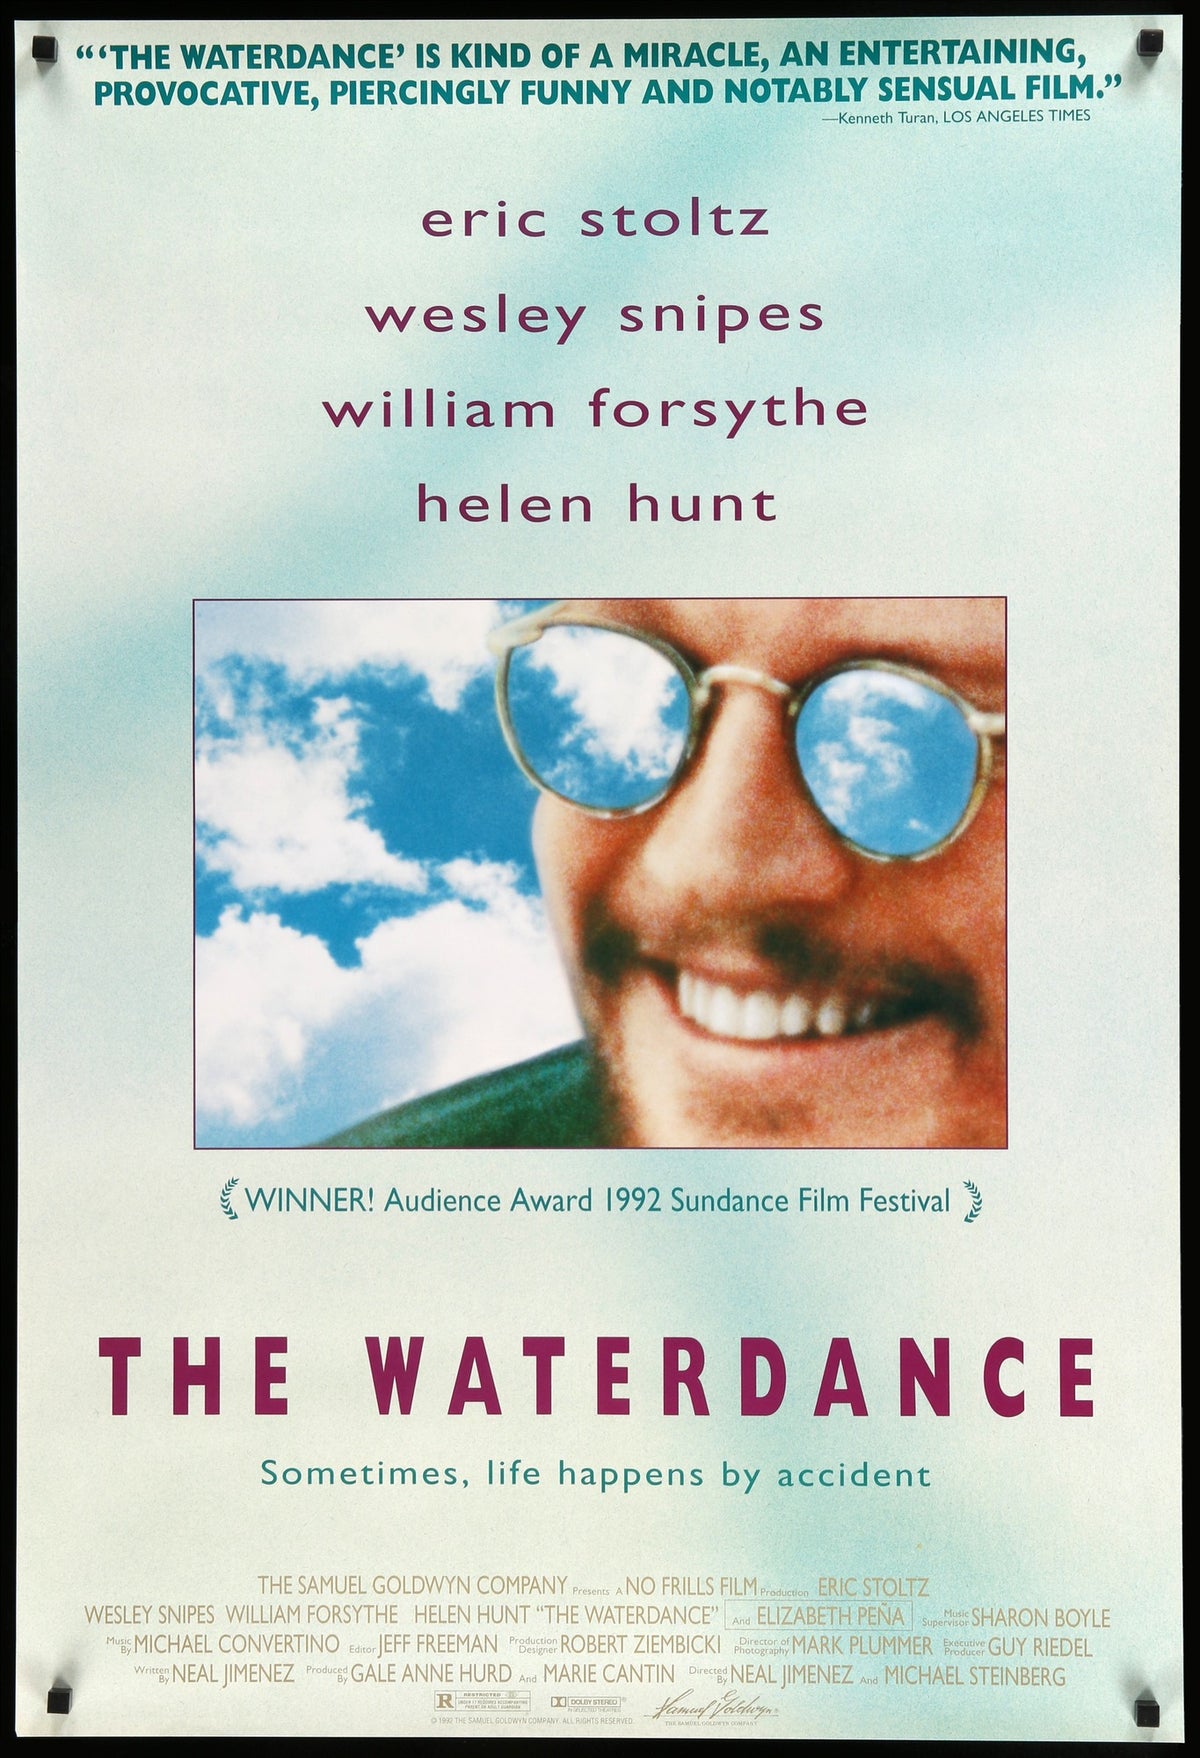 Waterdance (1992) original movie poster for sale at Original Film Art